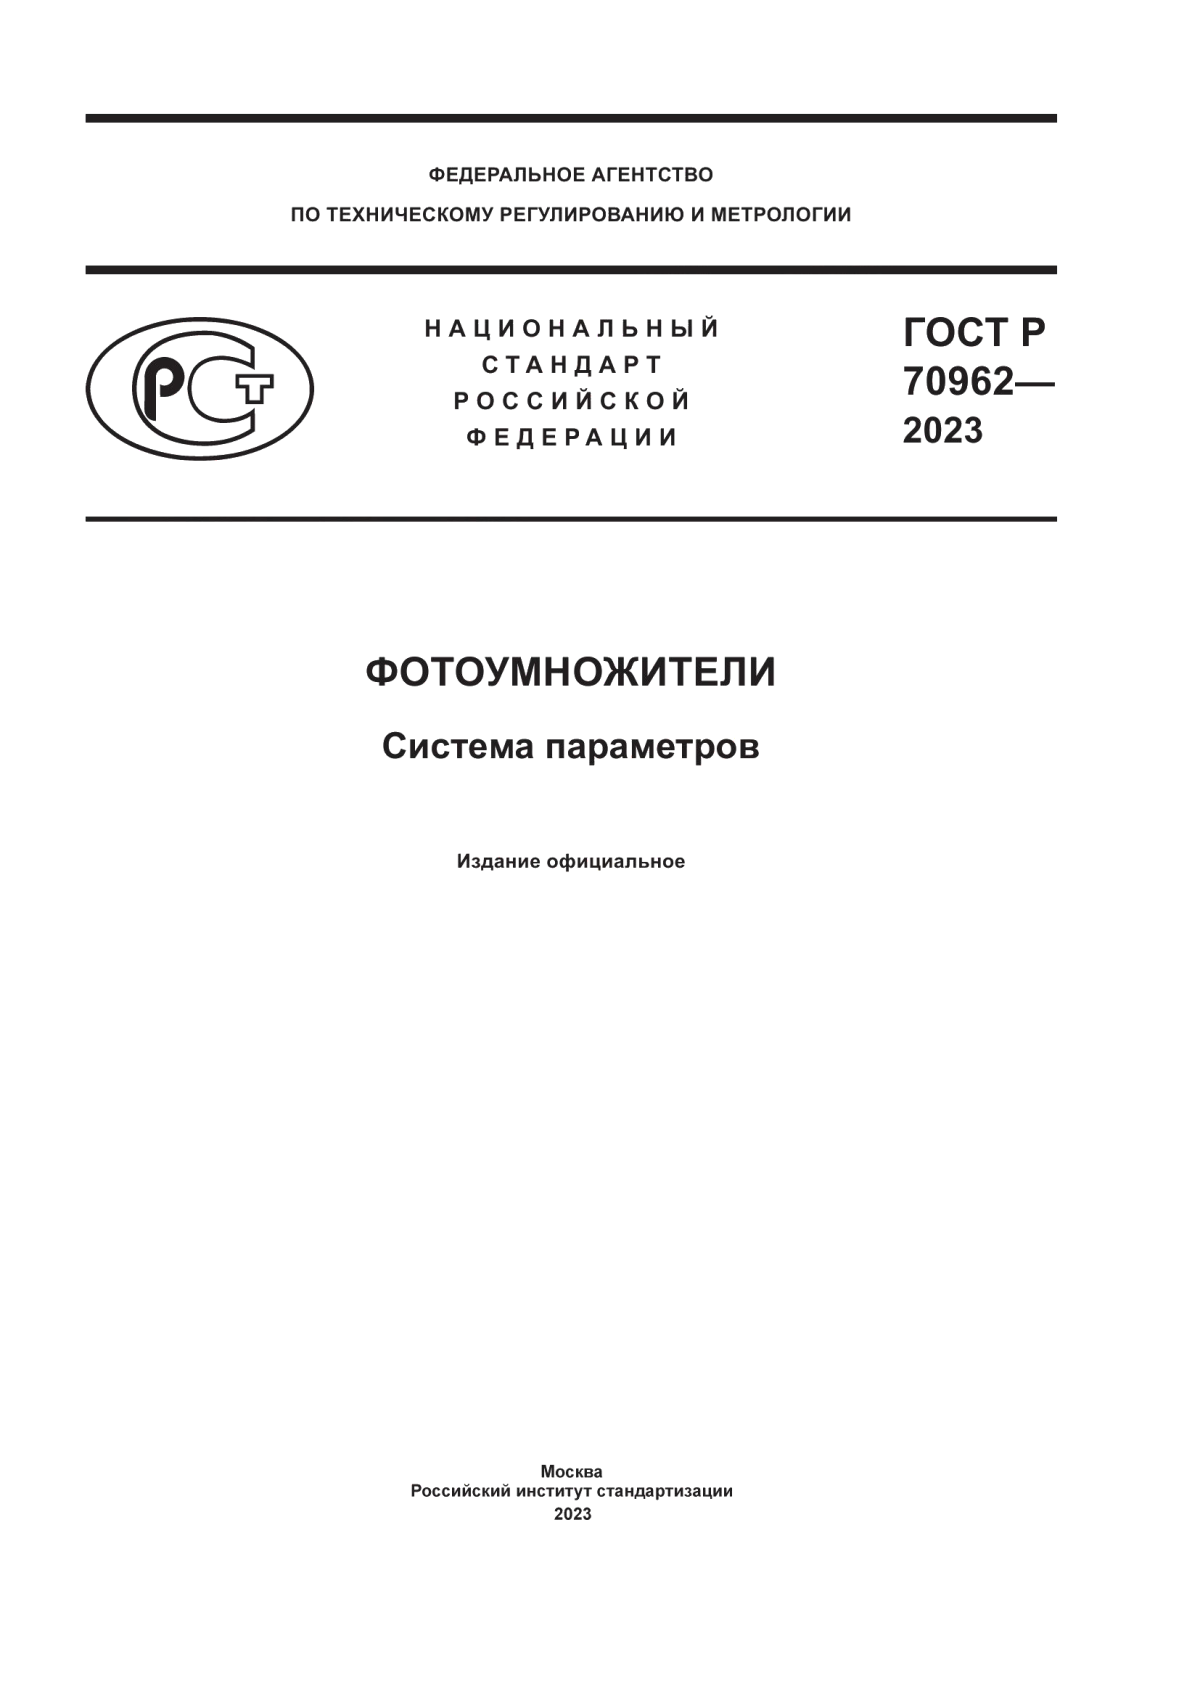 ГОСТ Р 70962-2023 Фотоумножители. Система параметров